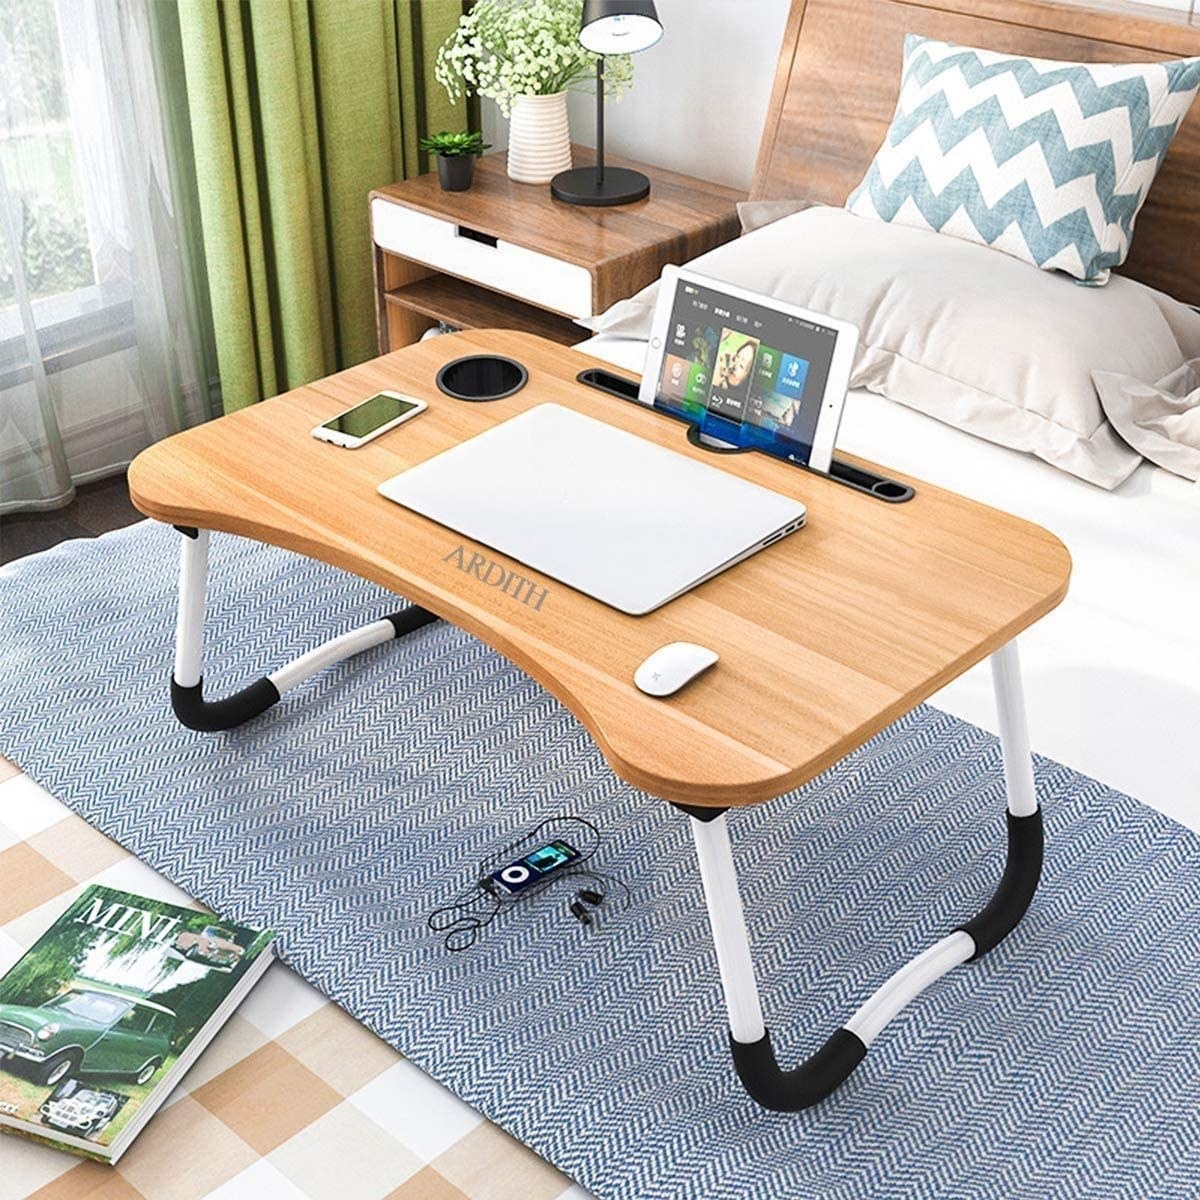 A foldable laptop desk on a bed 